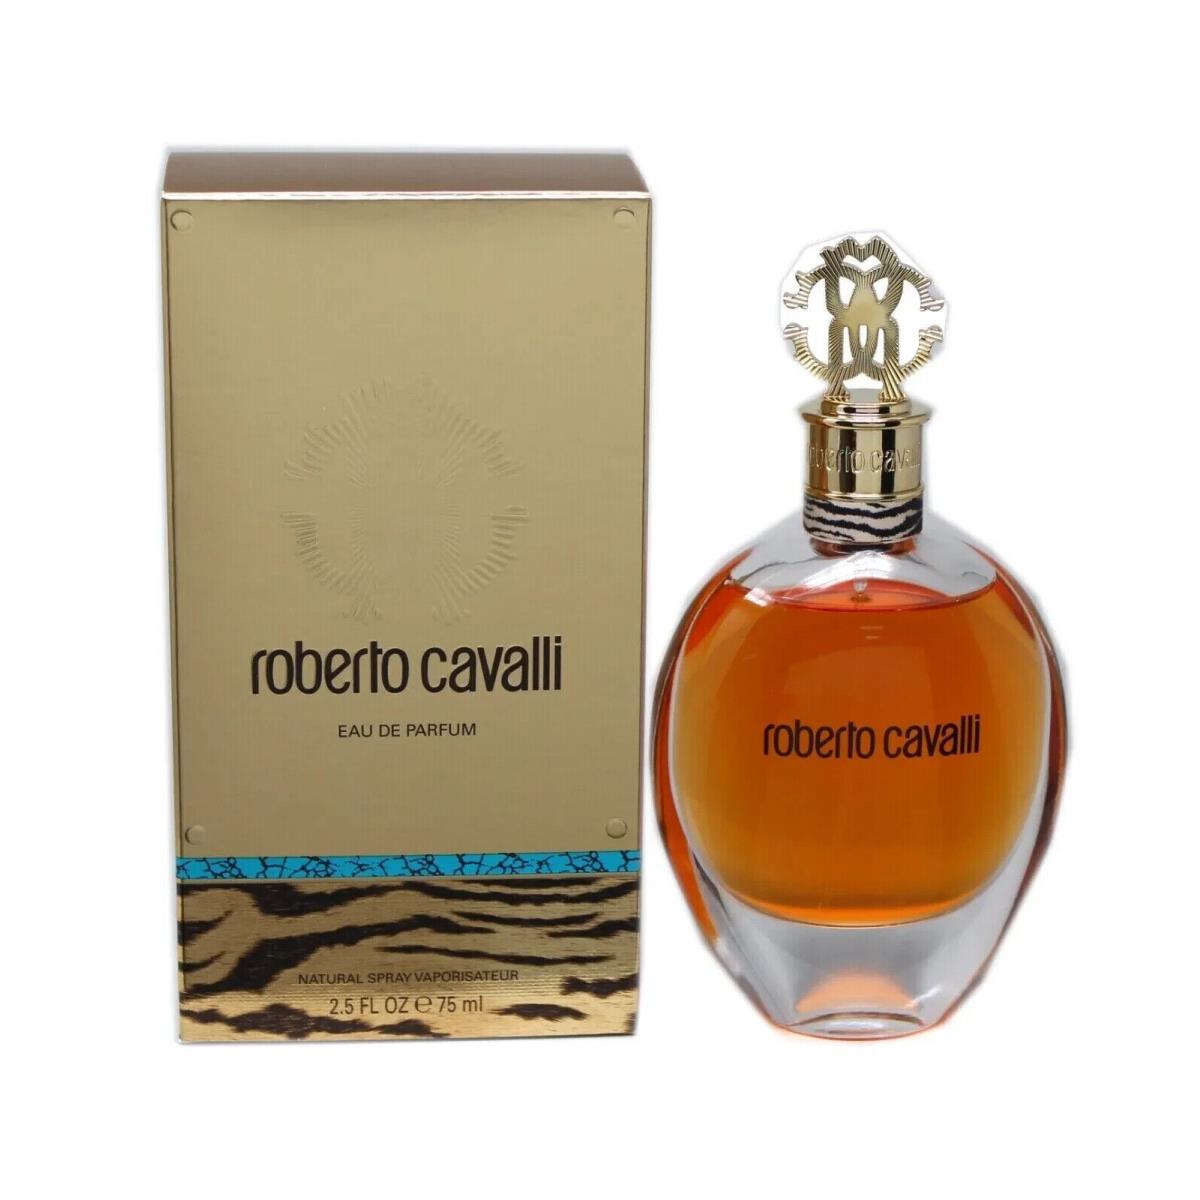 Roberto Cavalli by Roberto Cavalli 75 ml/2.5oz Eau de Parfum Spray